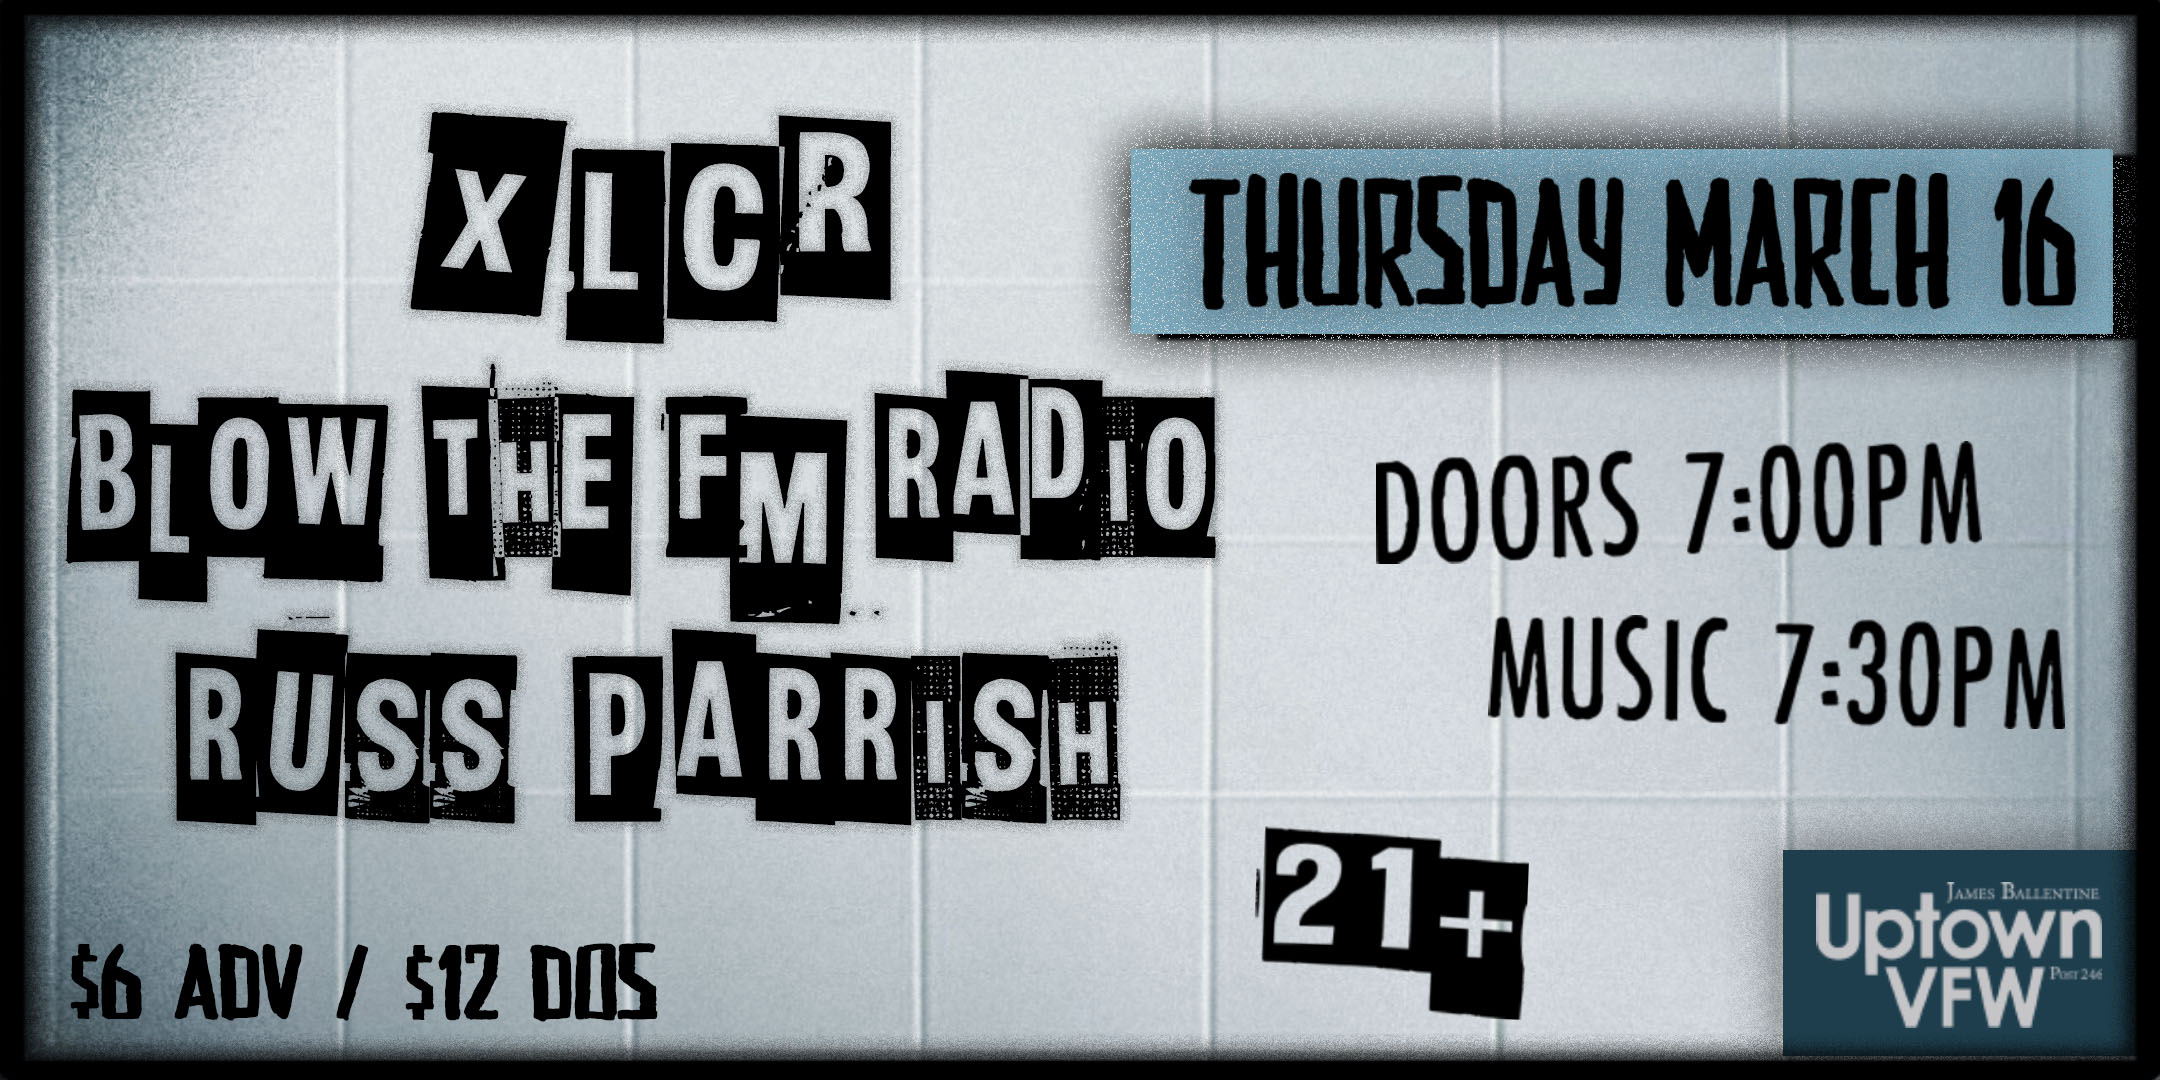 xLCR Blow The FM Radio Russ Parrish Thursday March 16 James Ballentine "Uptown" VFW Post 246 Doors 7:00pm :: Music 7:30pm :: 21+ GA $6 ADV / $12 DOS NO REFUNDS